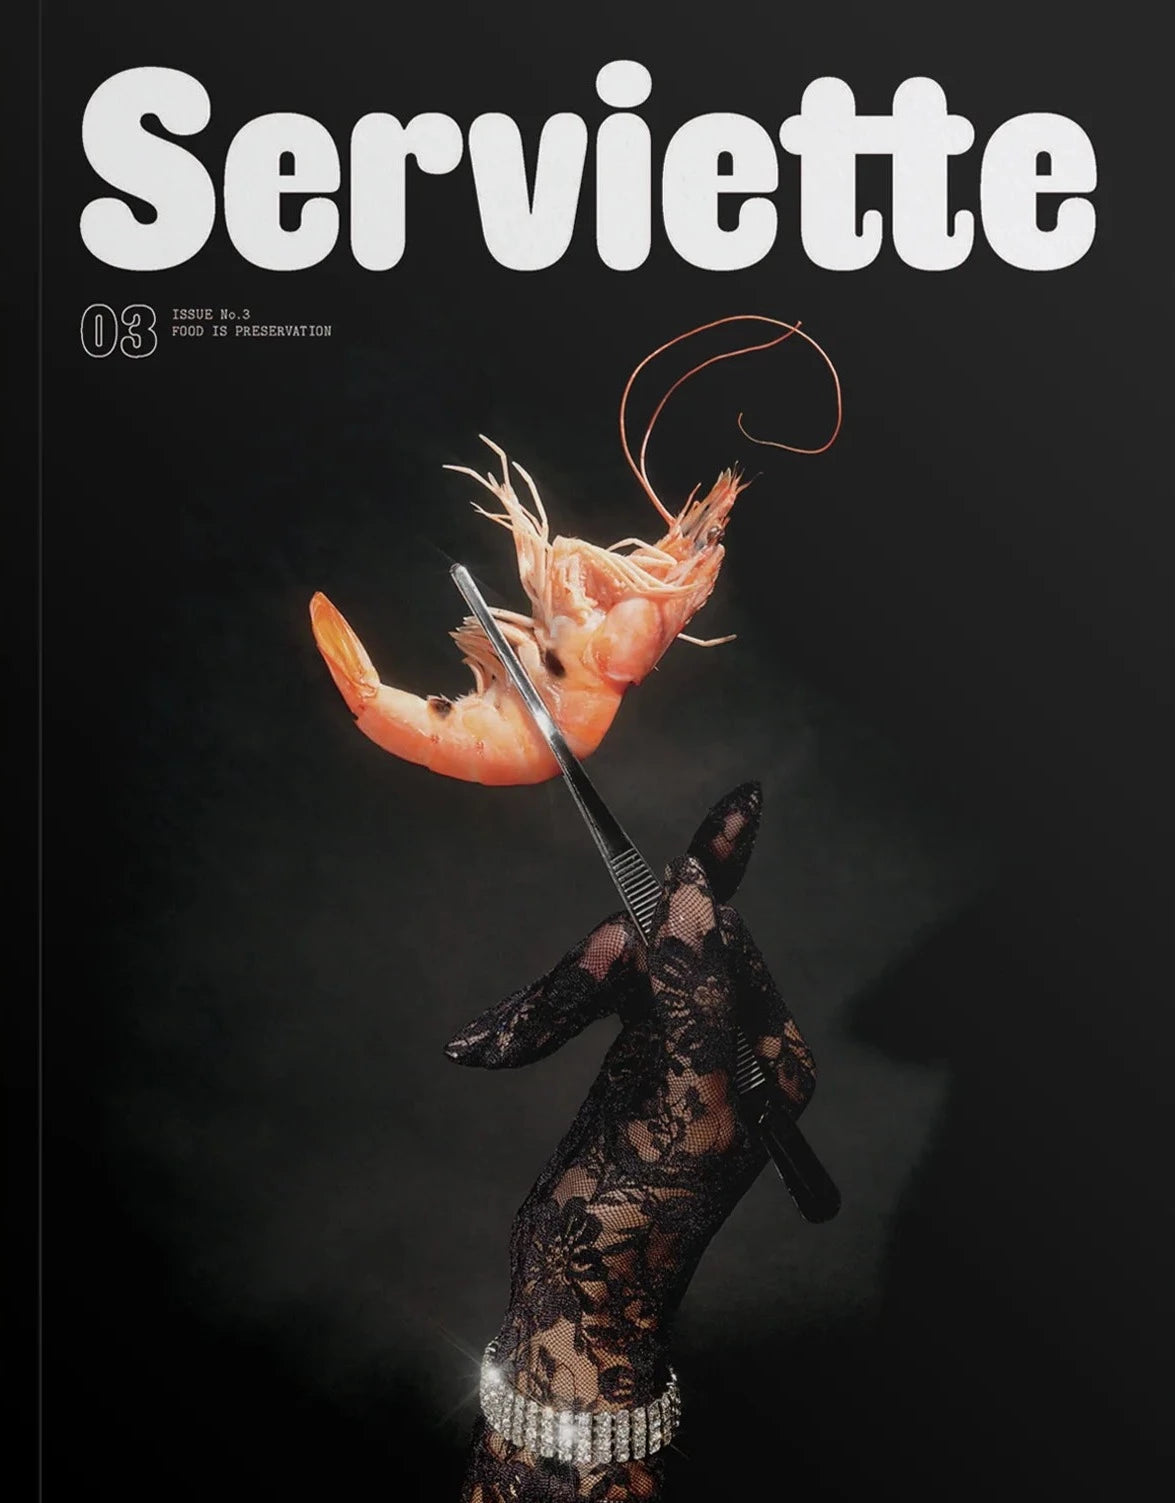 Serviette #3 Food is preservation